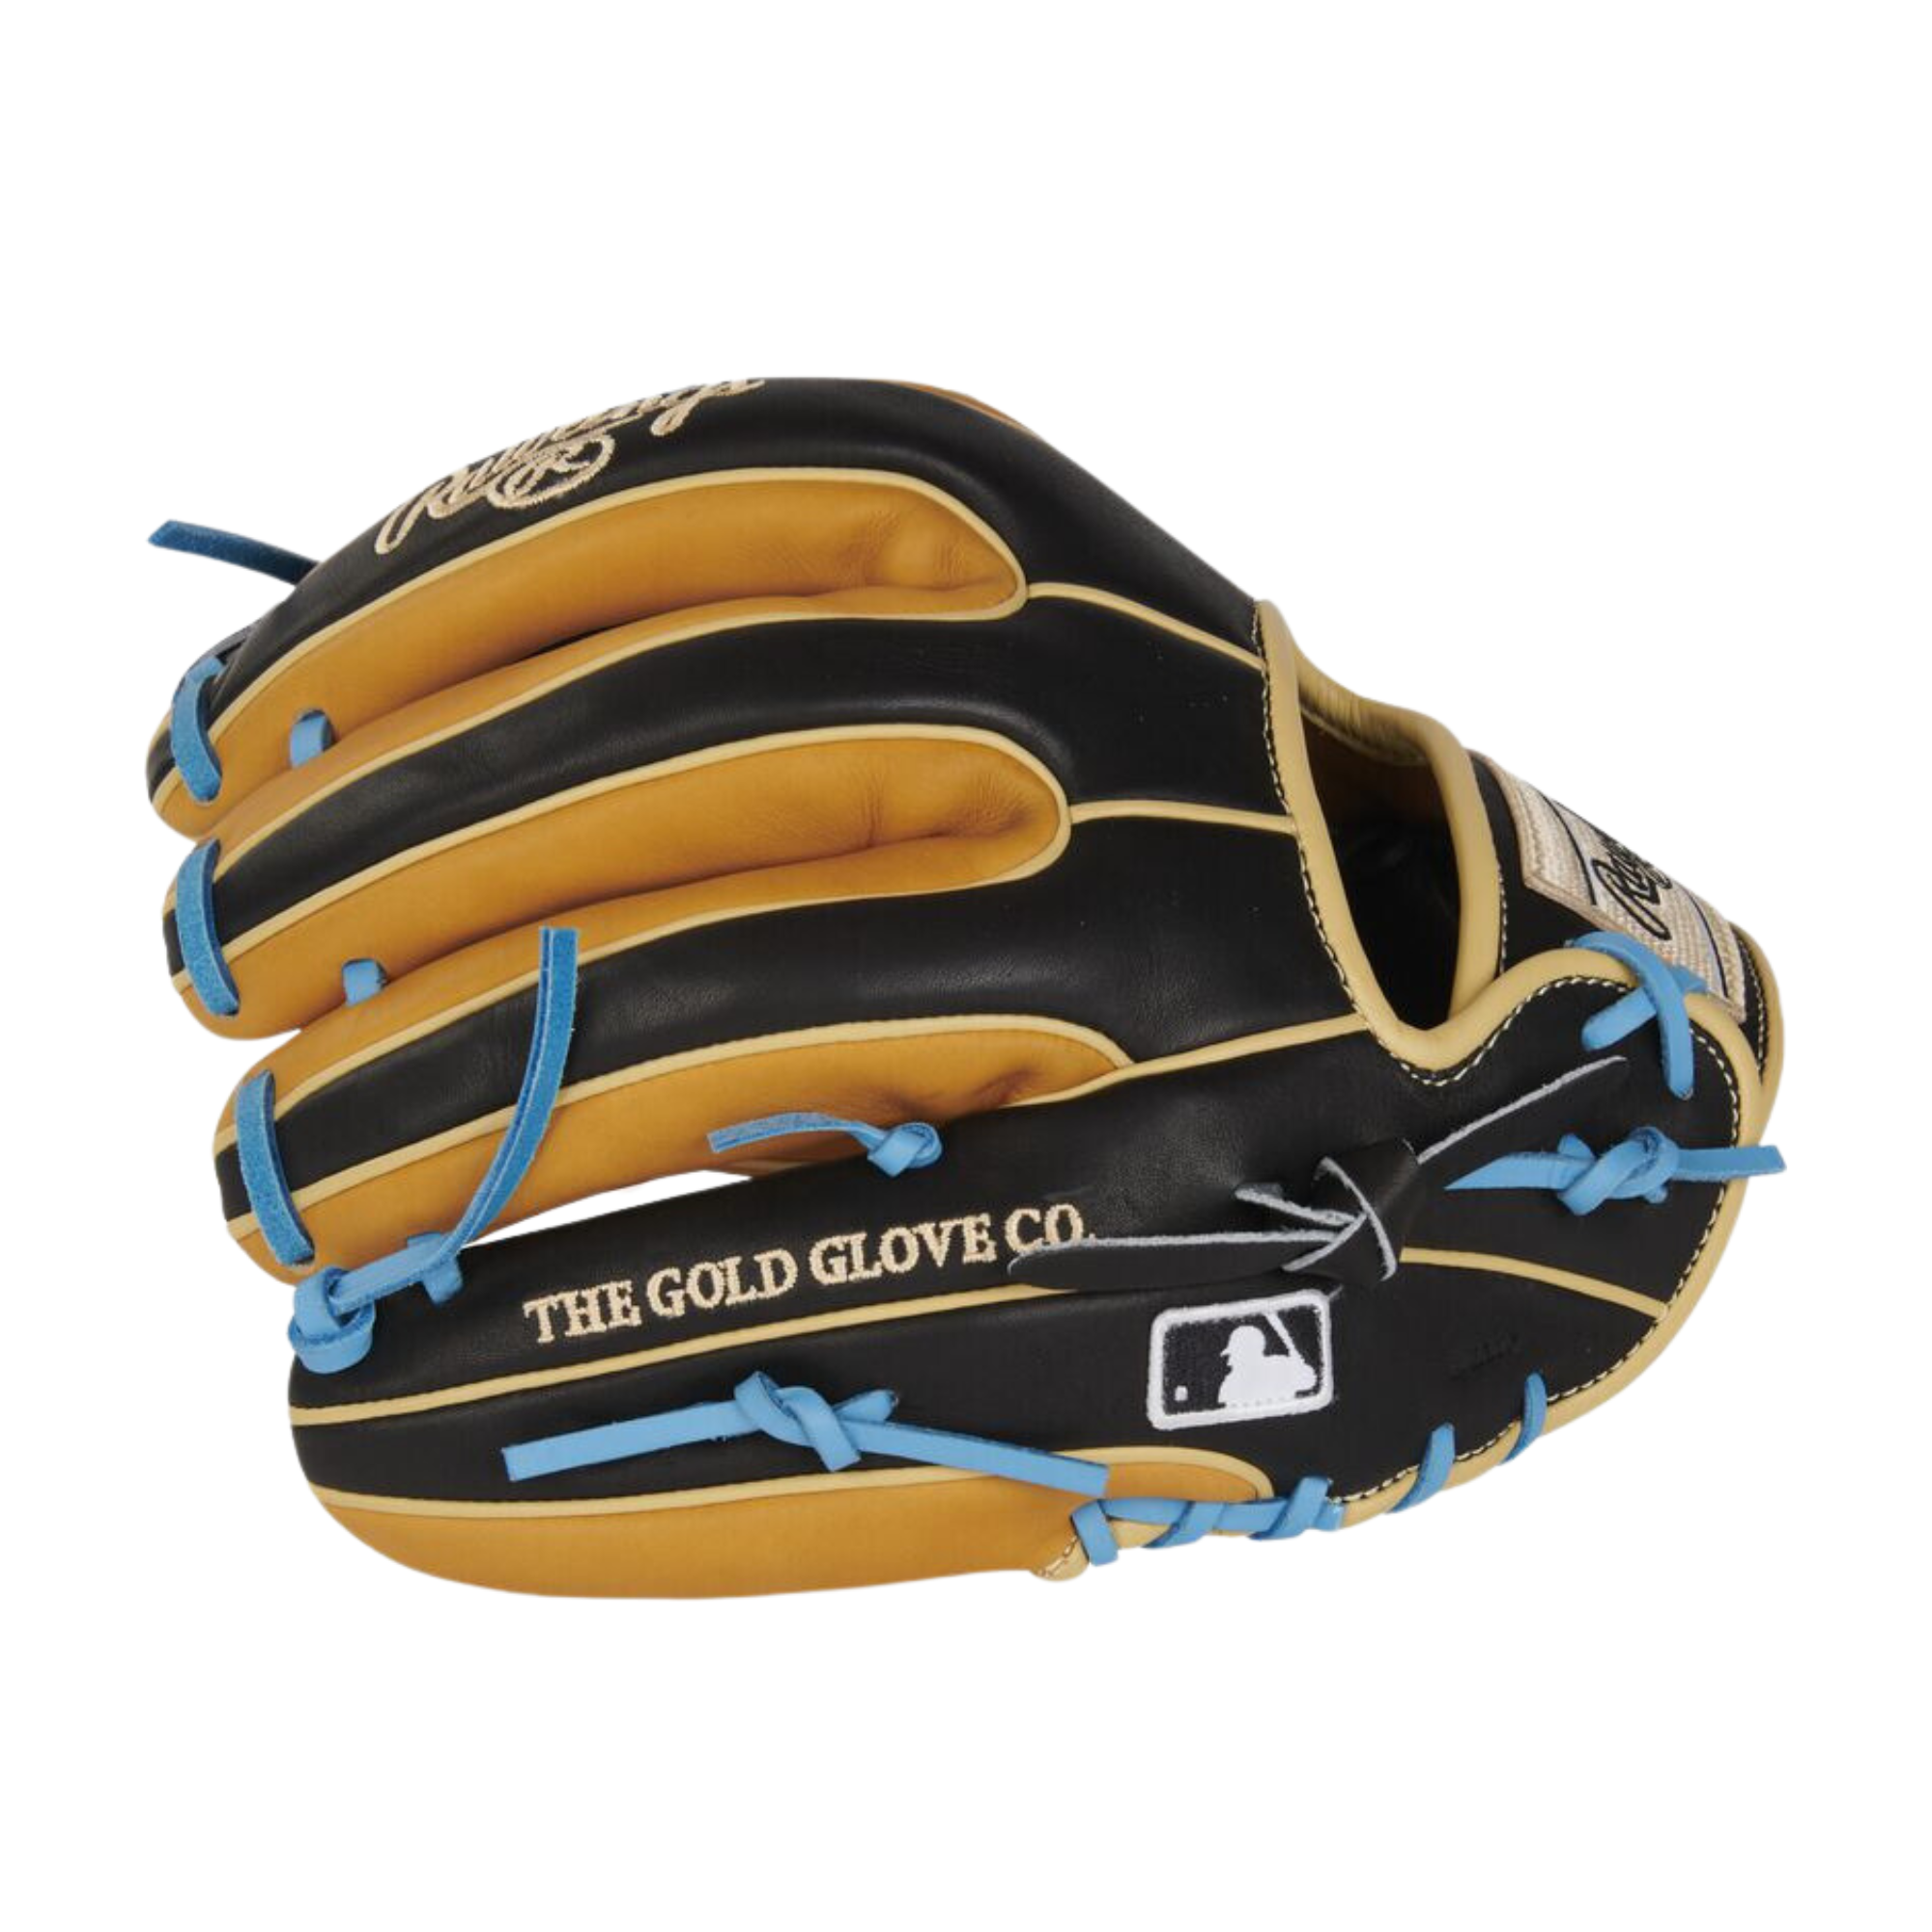 Rawlings Heart Of The Hide Series Baseball Glove 11.75" RPROR315-2TB RHT